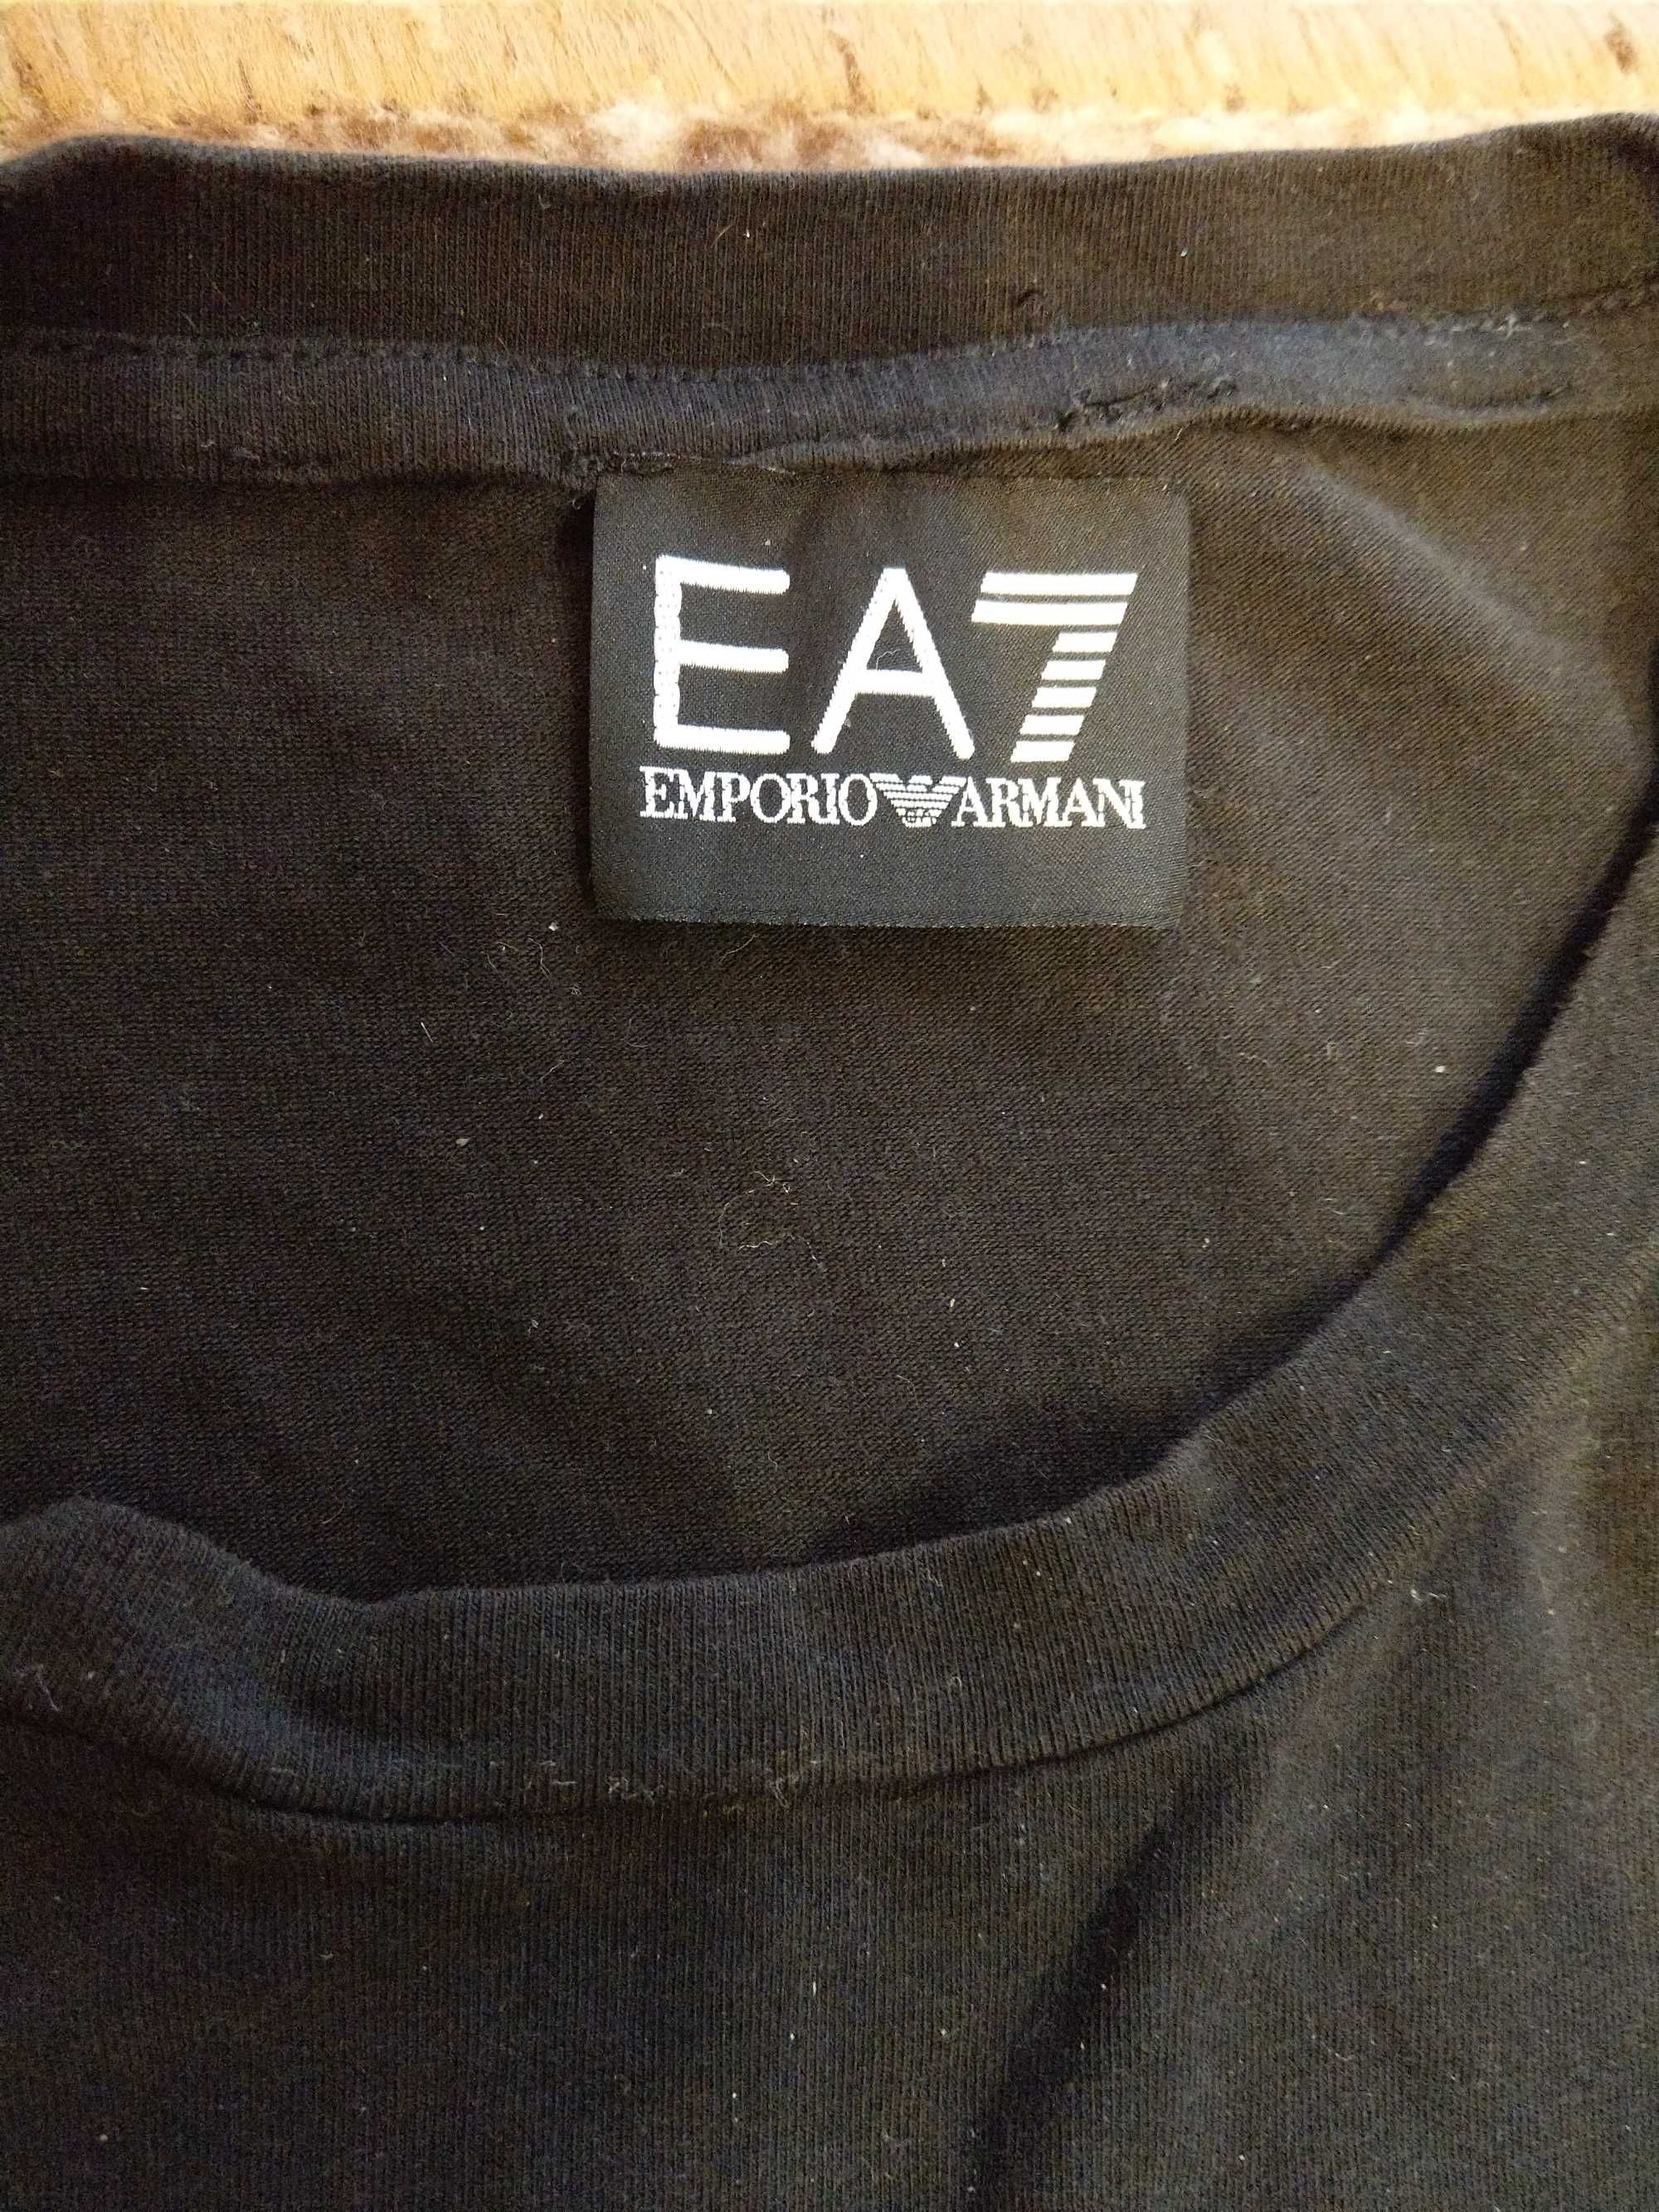 longsleeve Emporio Armani EA7 central logo(unisex)